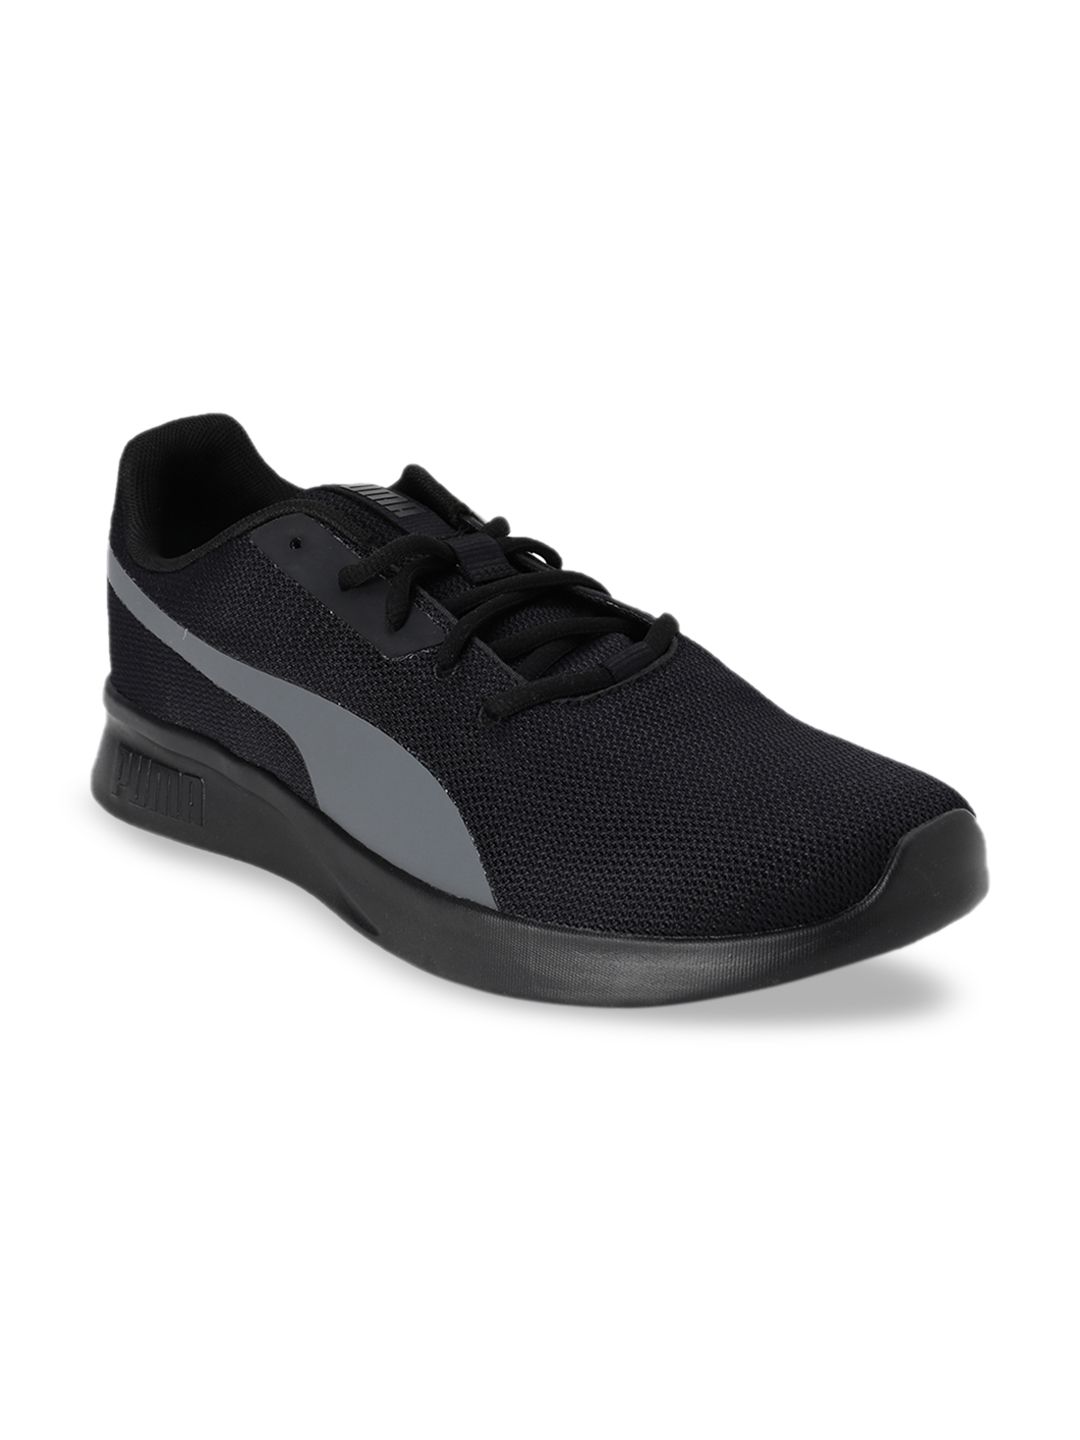 Puma Unisex Black & Grey Mesh Modern Runner Running Shoes Price in India